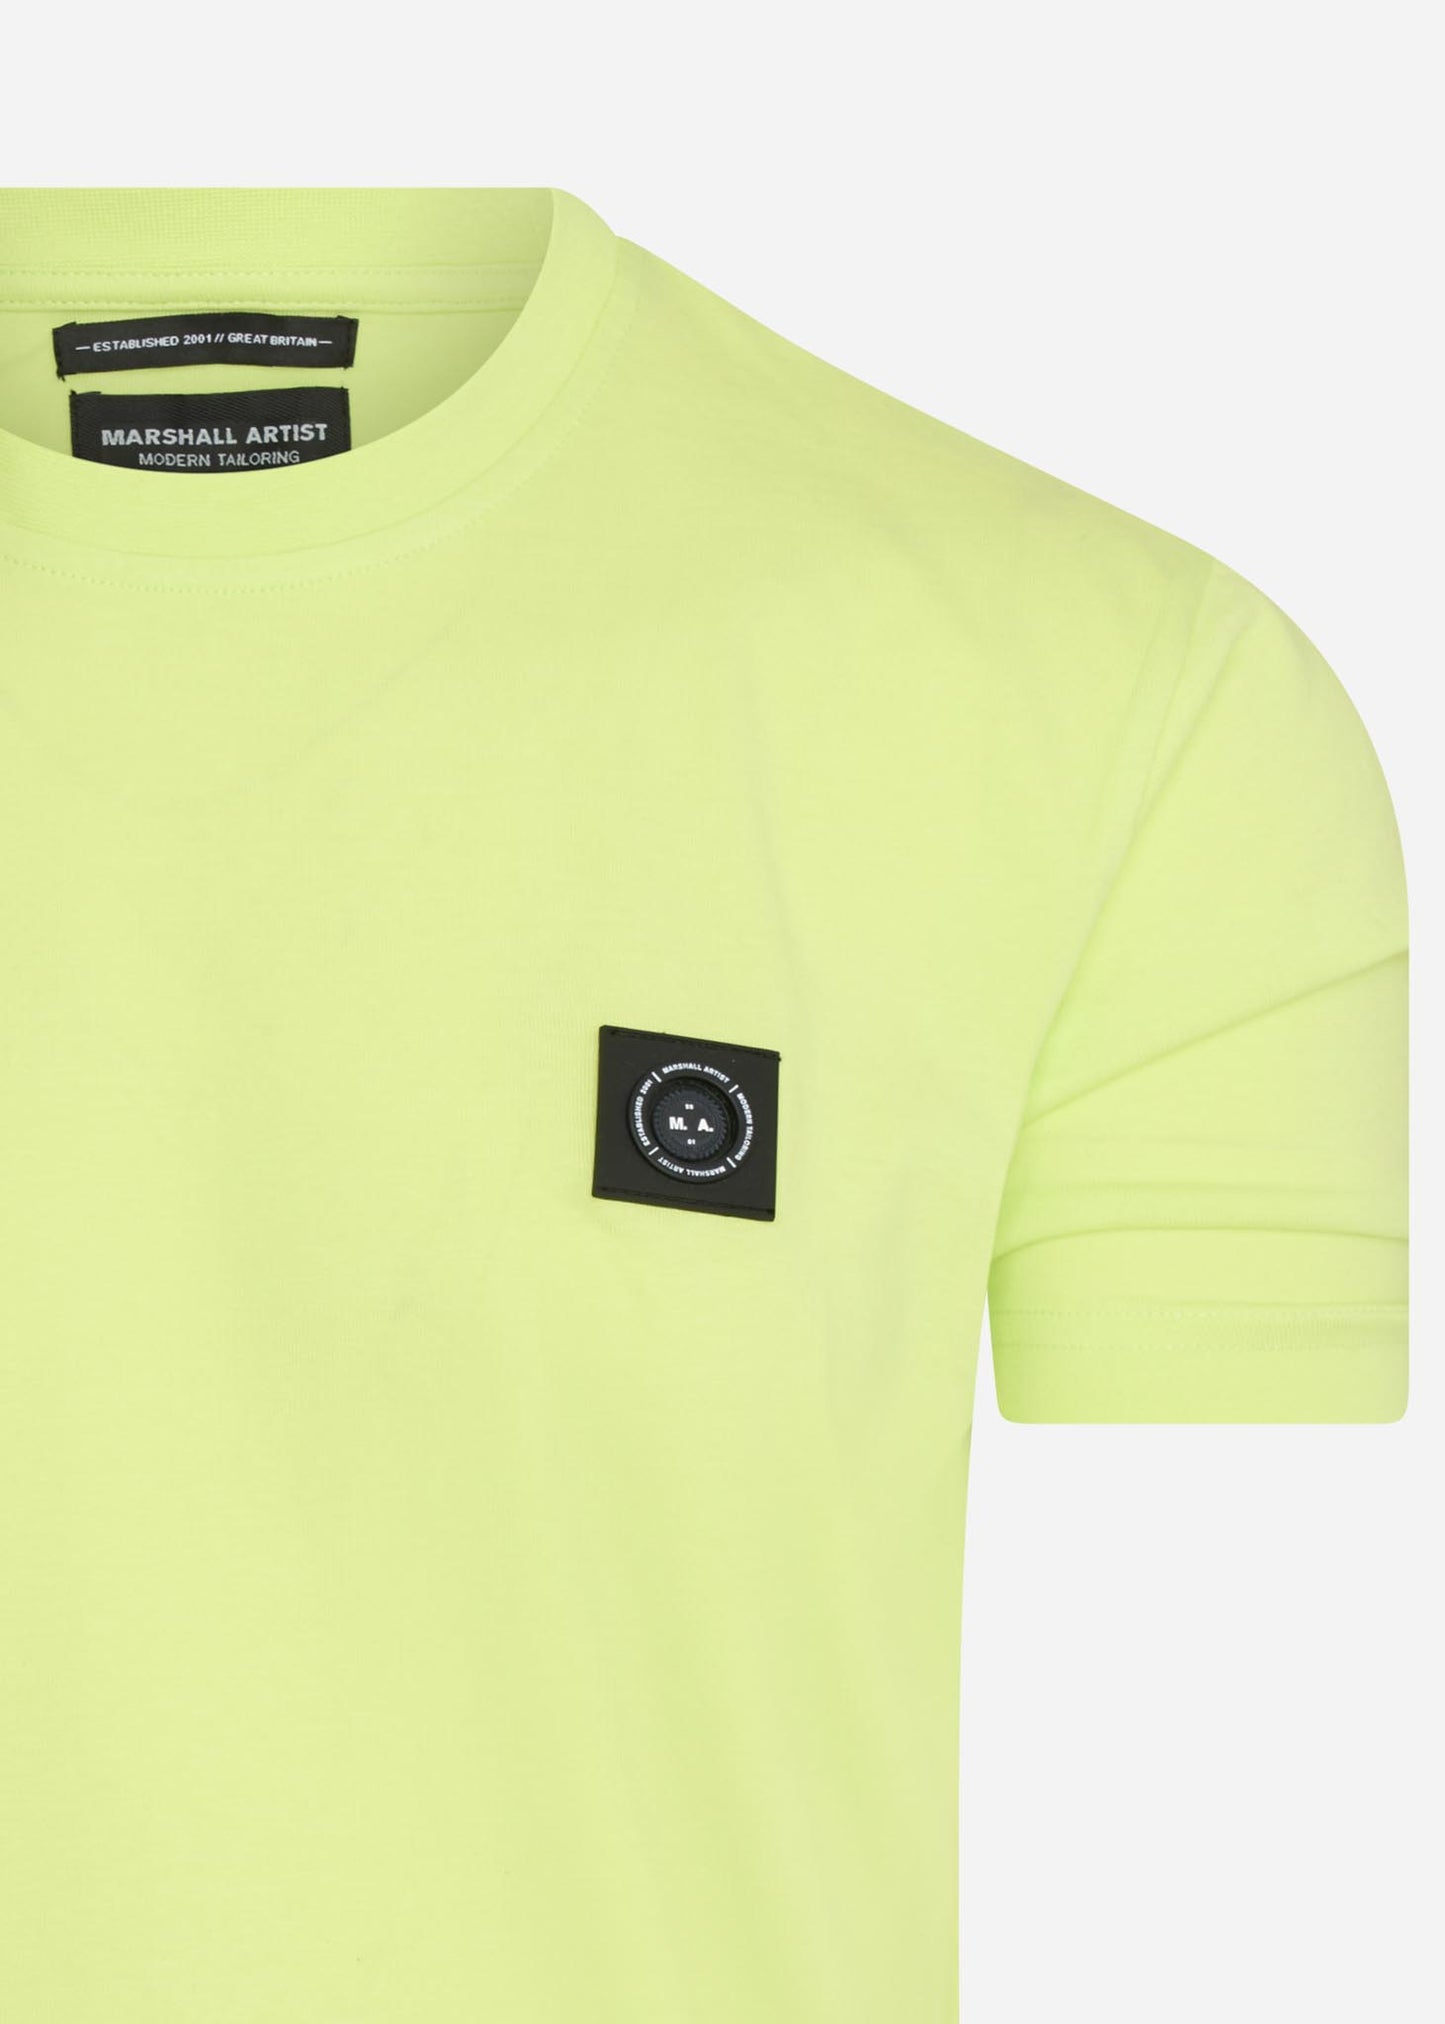 marshall artist faded lime t-shirt